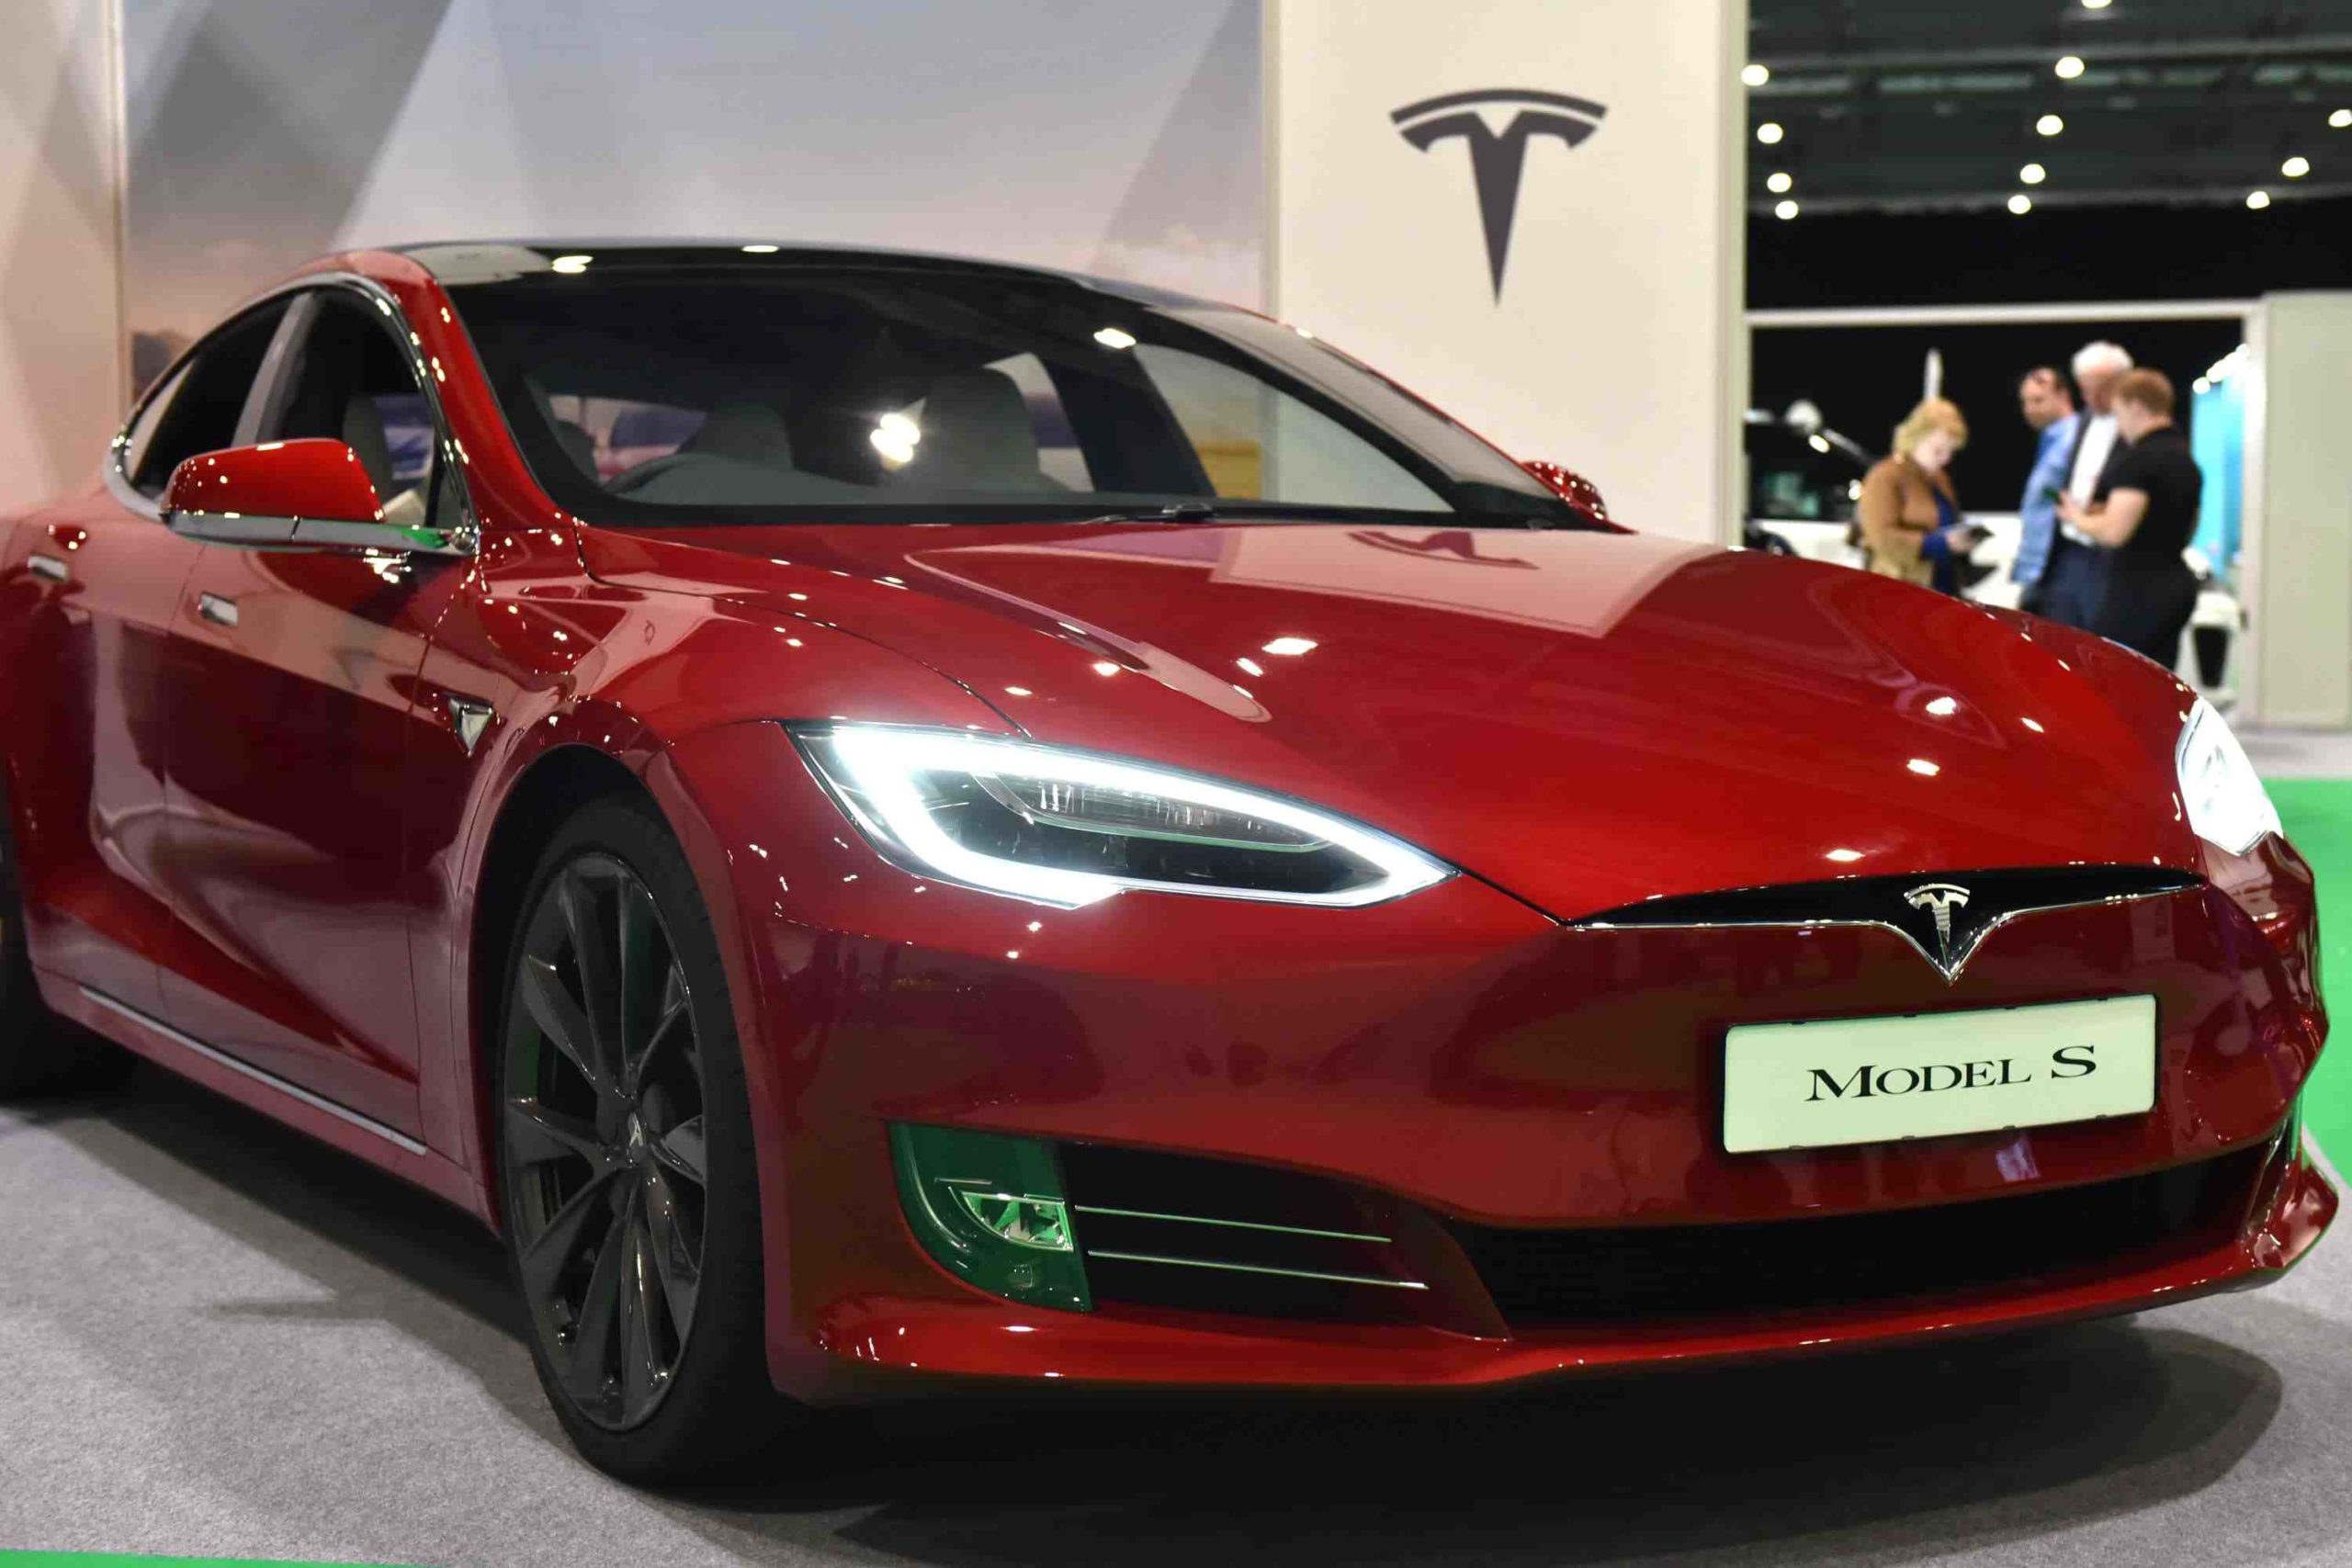 Where are Australian Tesla's made?